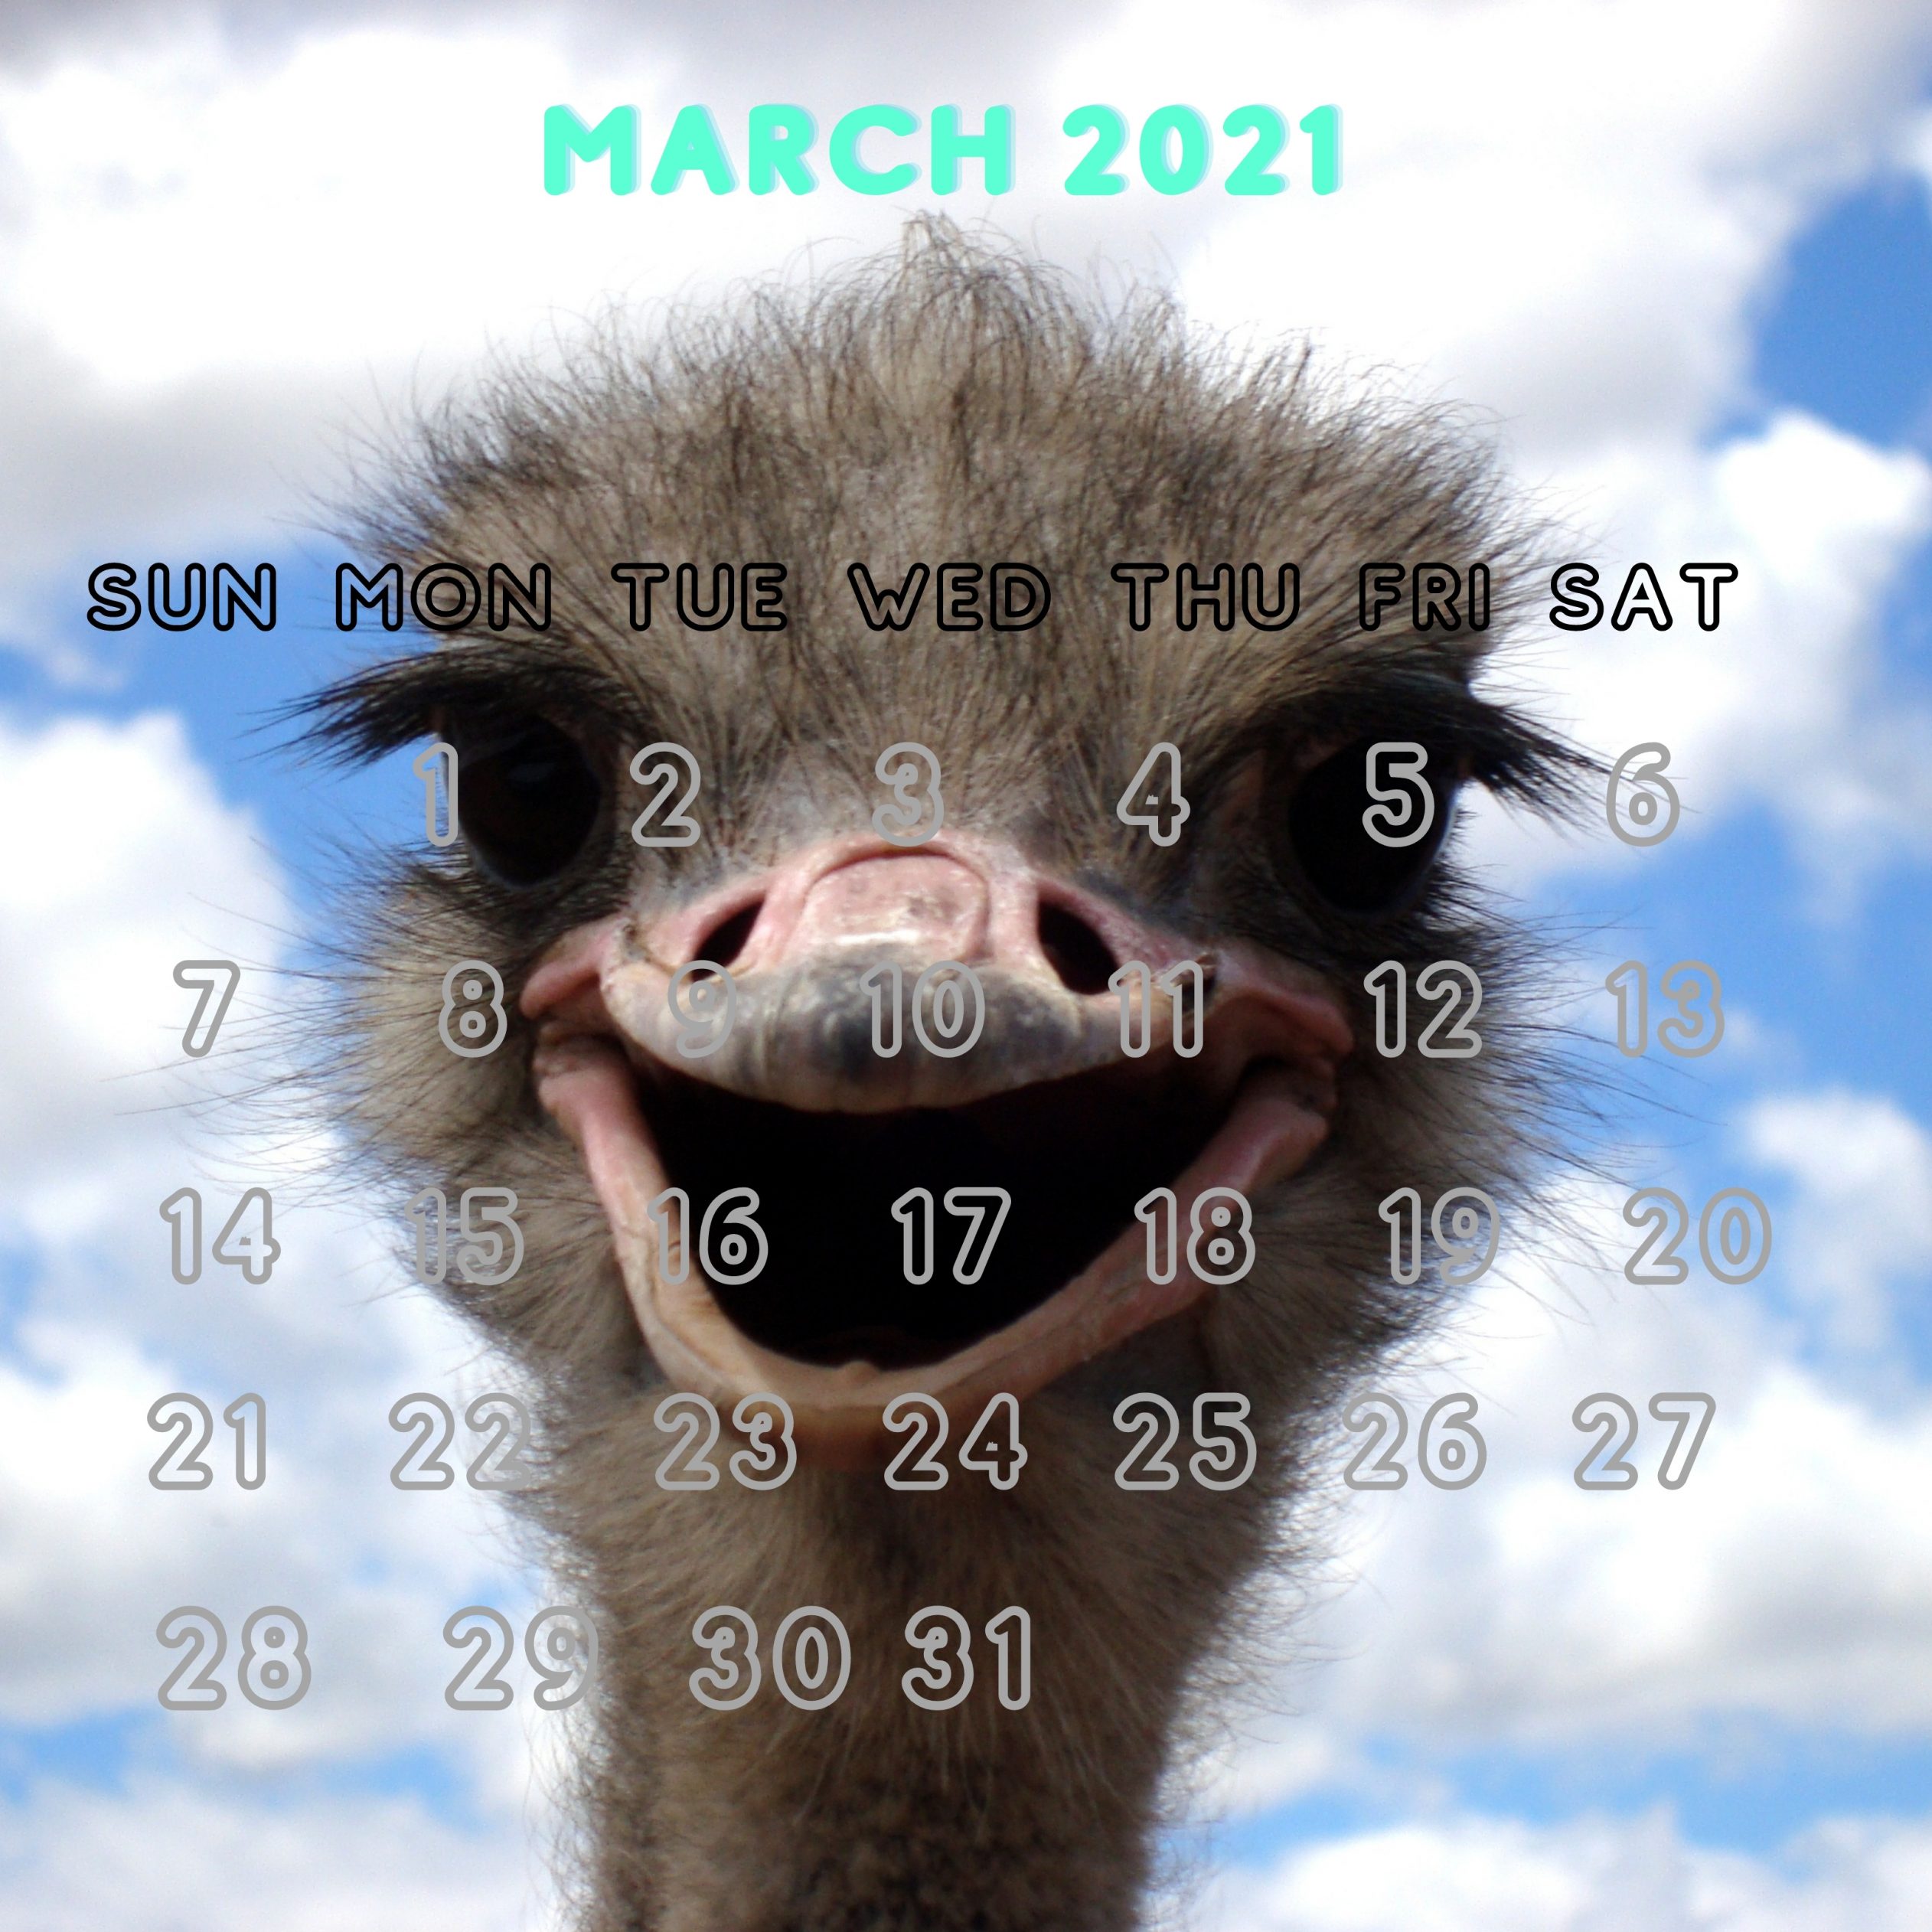 2524x2524 Parallax wallpaper 4k March 2021 Ostrich Smiling iPad Wallpaper 2524x2524 pixels resolution